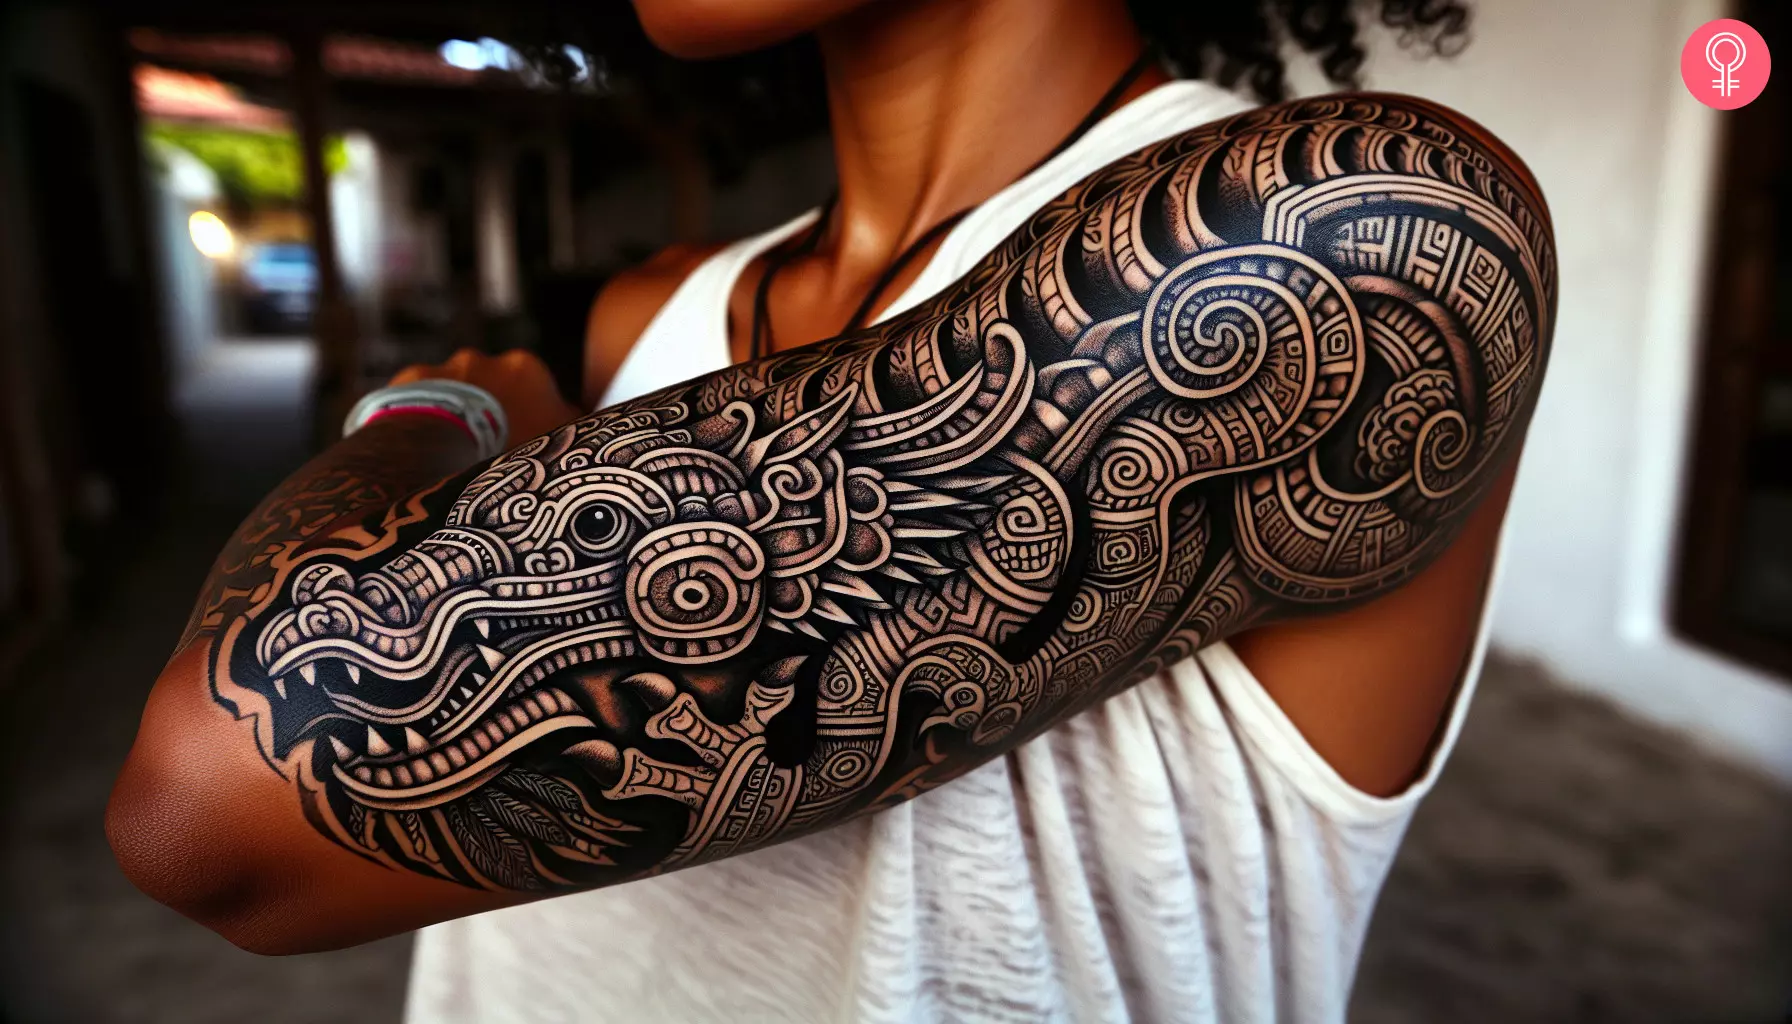 A Mayan dragon tattoo on a woman’s arm